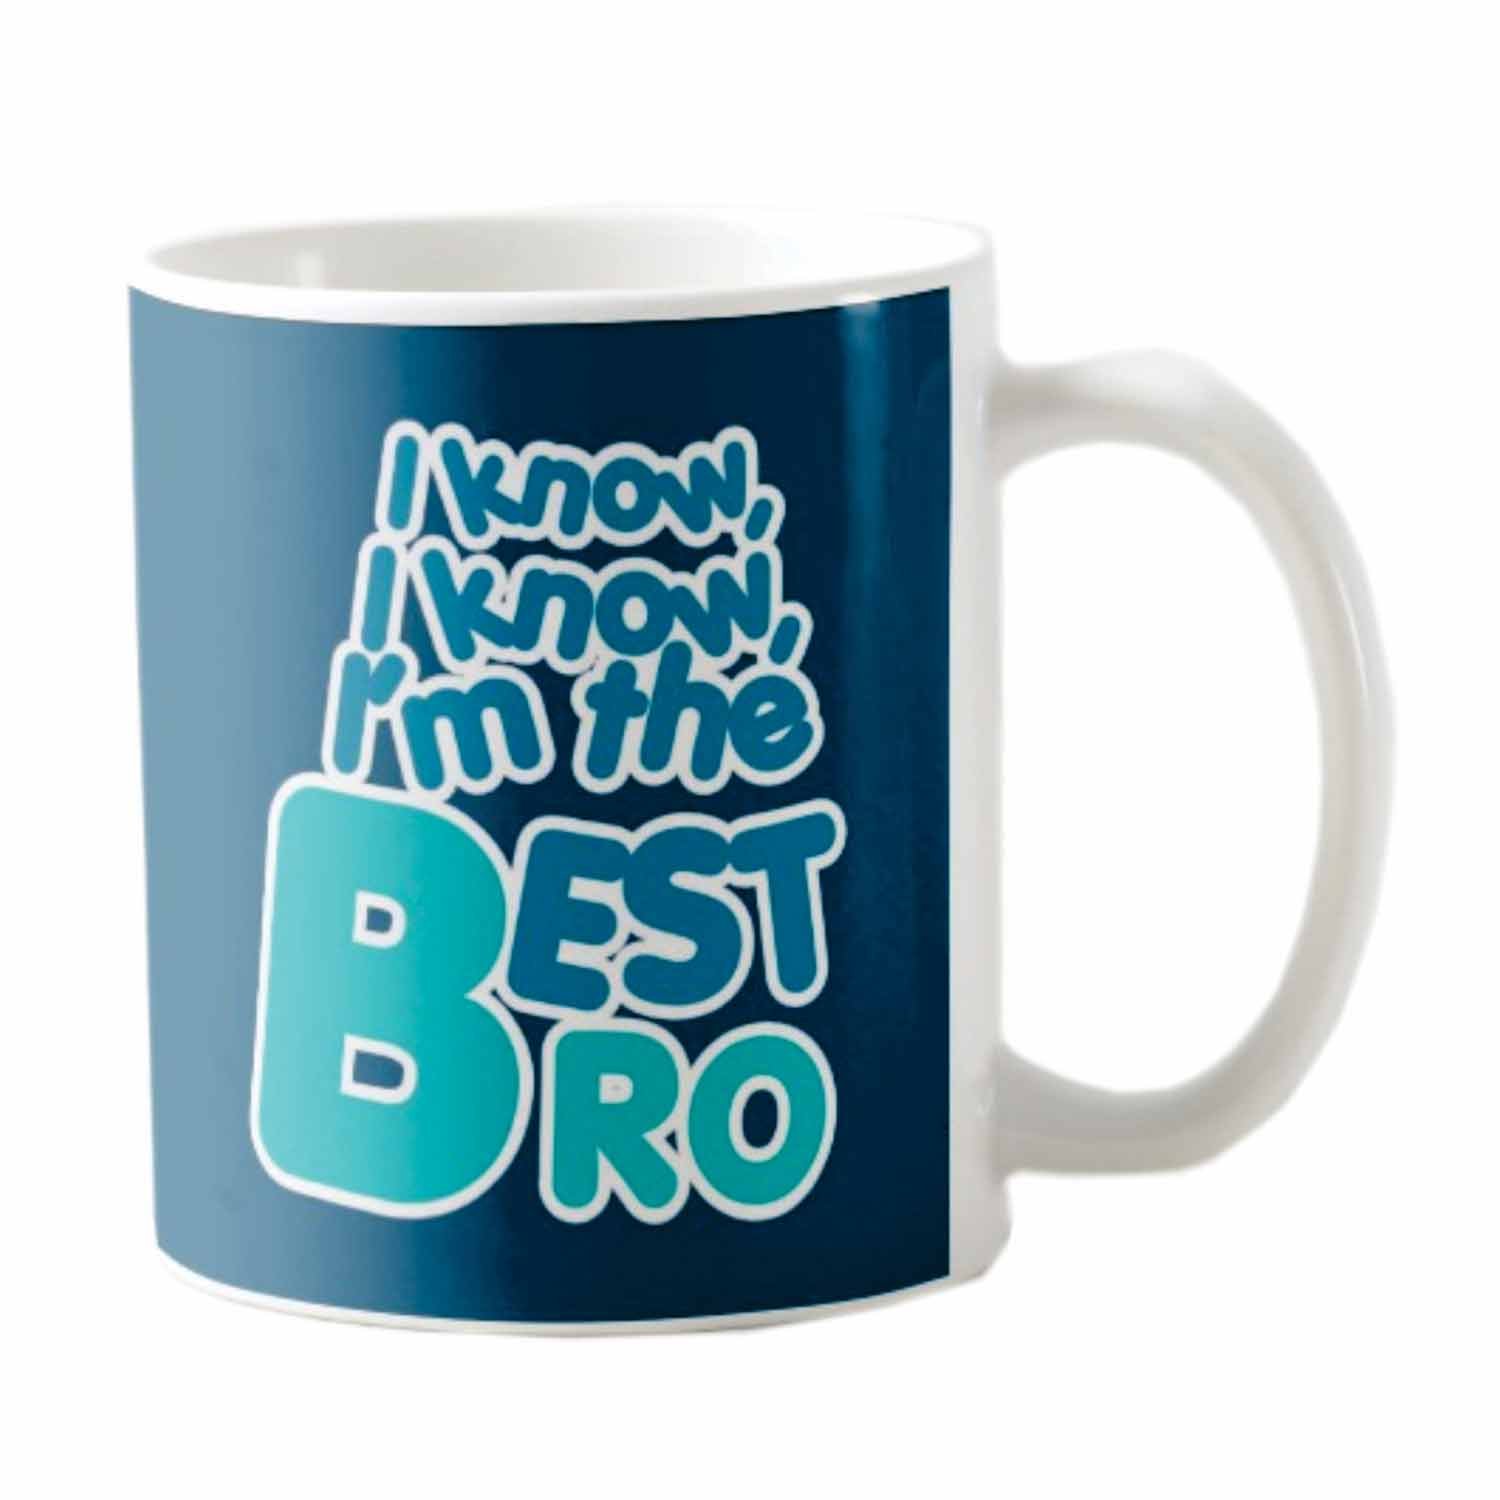 I Know I am The Best Bro Coffee Mug